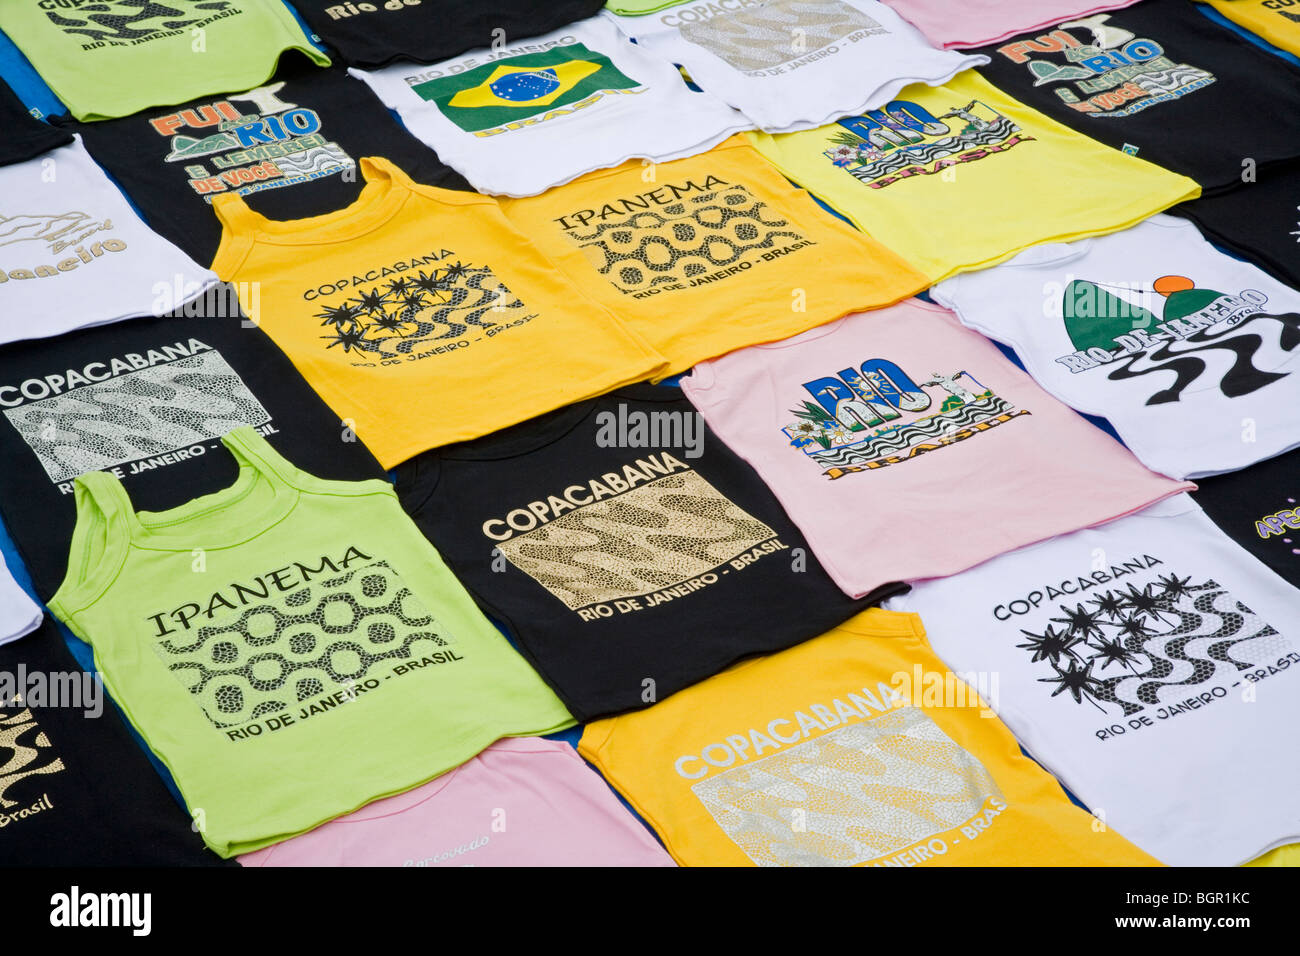 T shirts souvenir -Fotos und -Bildmaterial in hoher Auflösung – Alamy